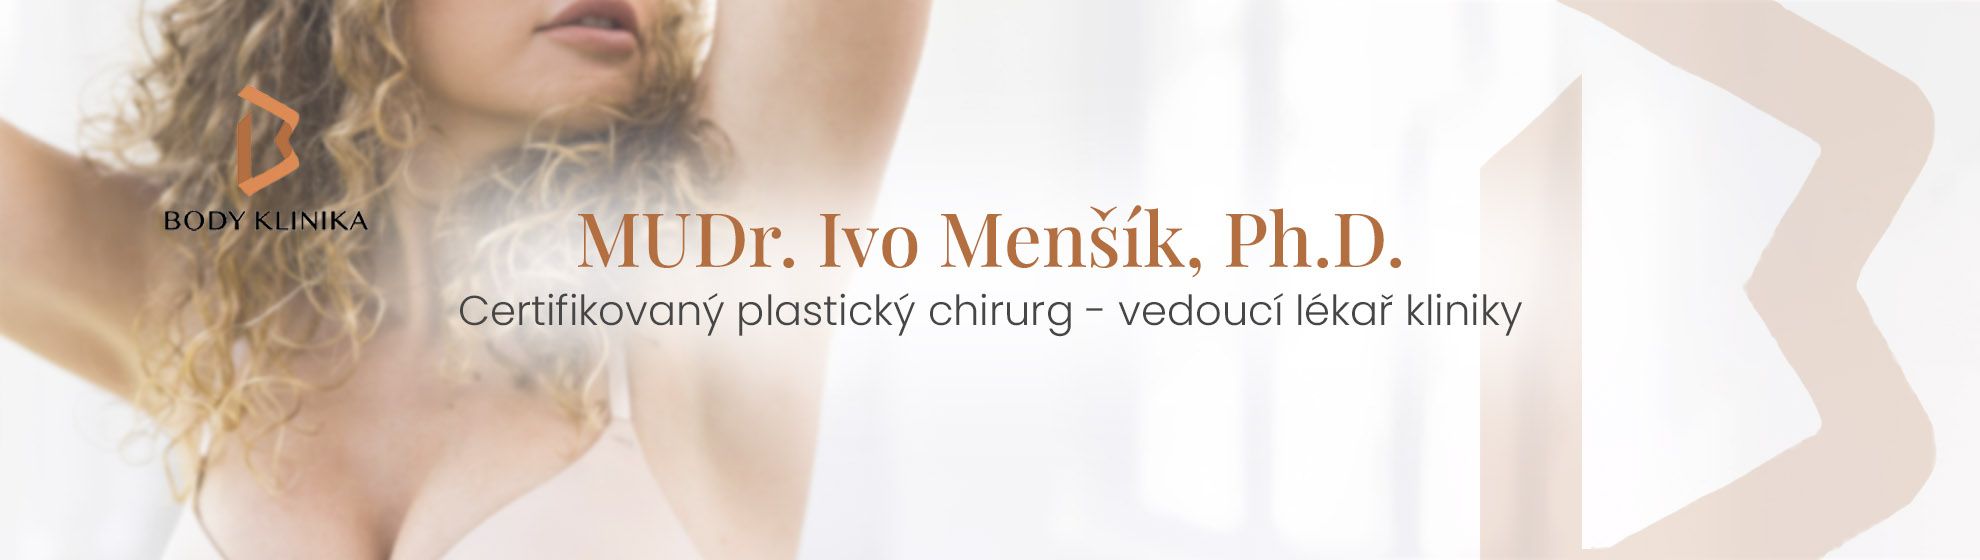 MUDr. Ivo Menšík, Ph.D. - BODY klinika plastické chirurgie